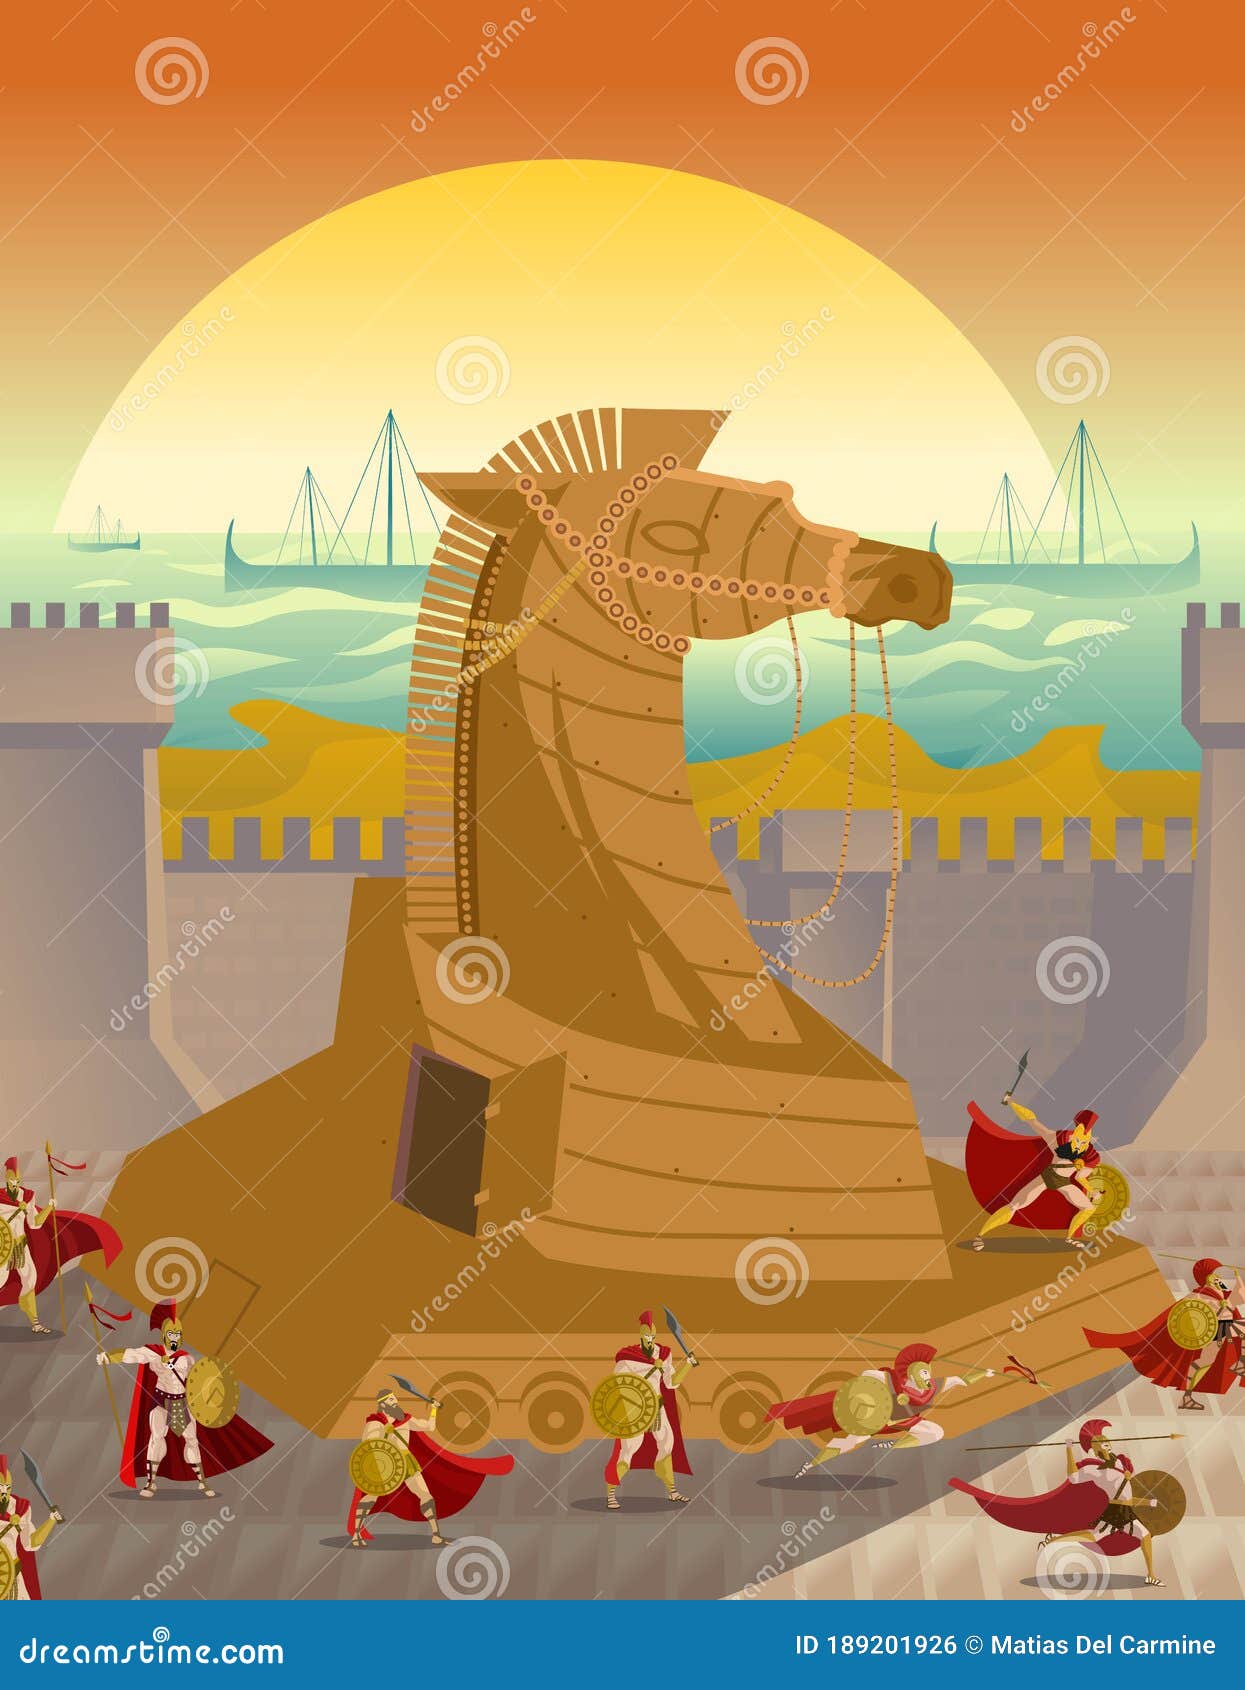 trojan troy horse ambush scene